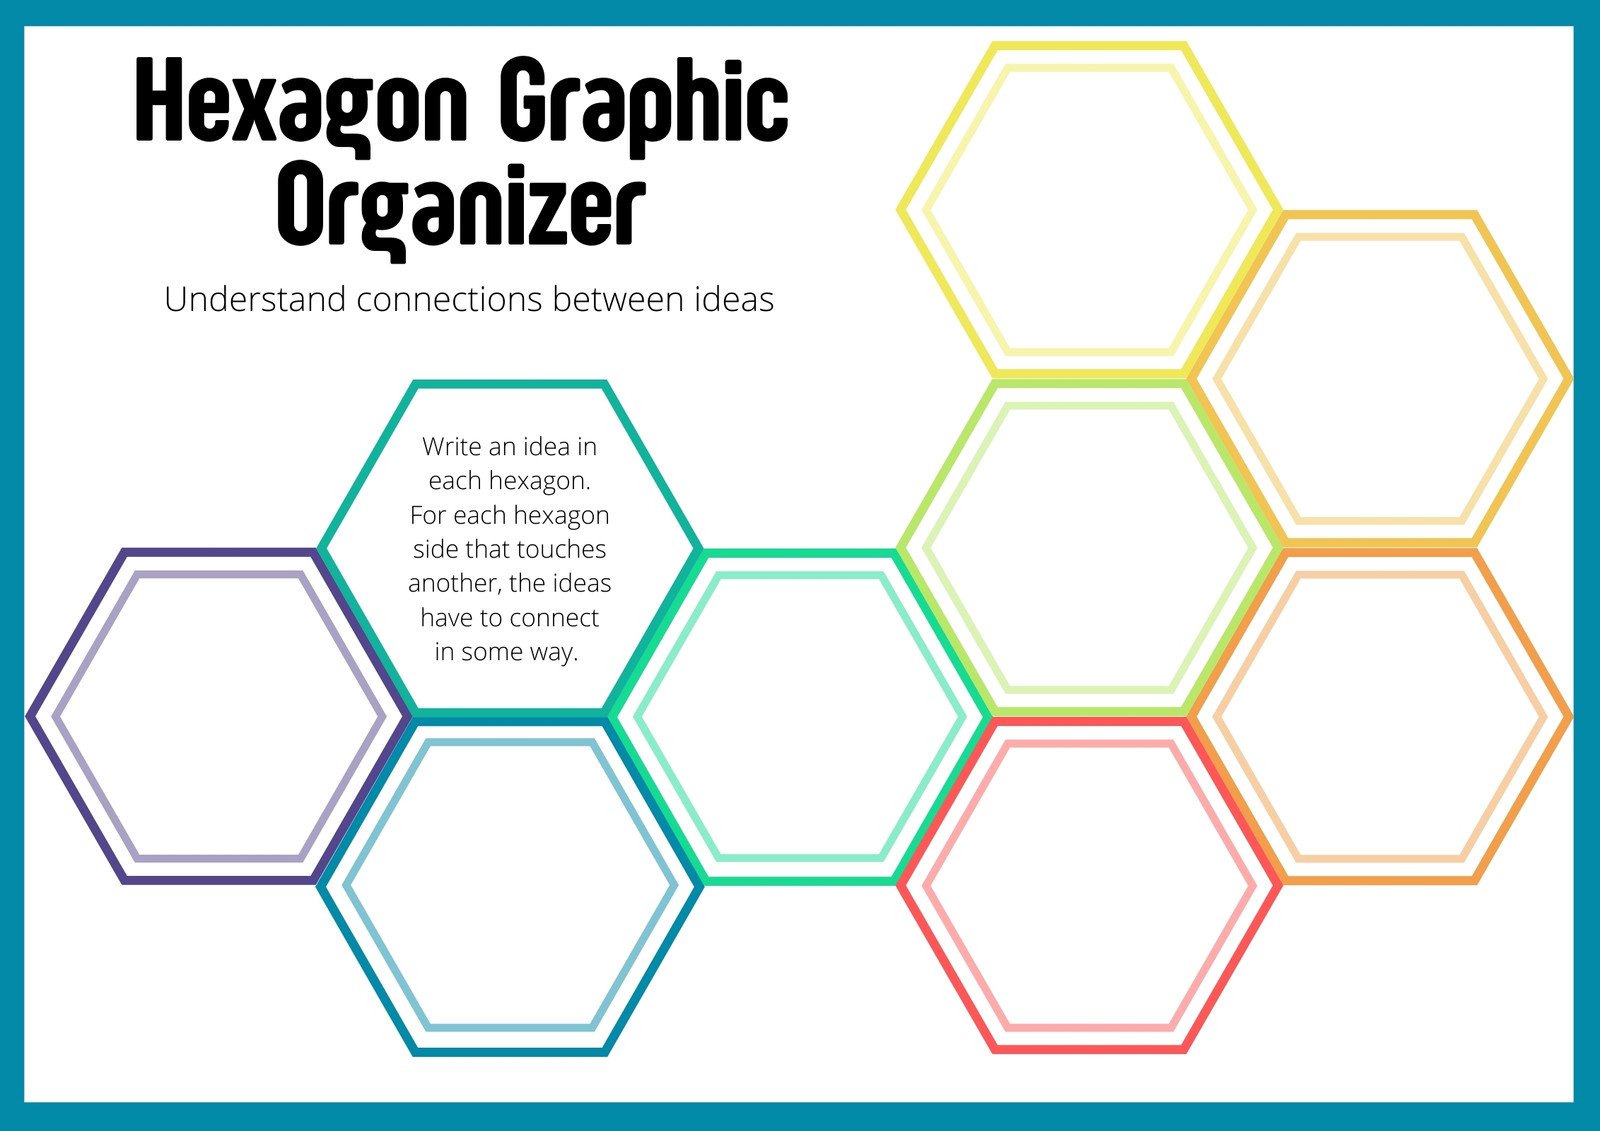 28+ Free Graphic Organizer Templates - Create Online